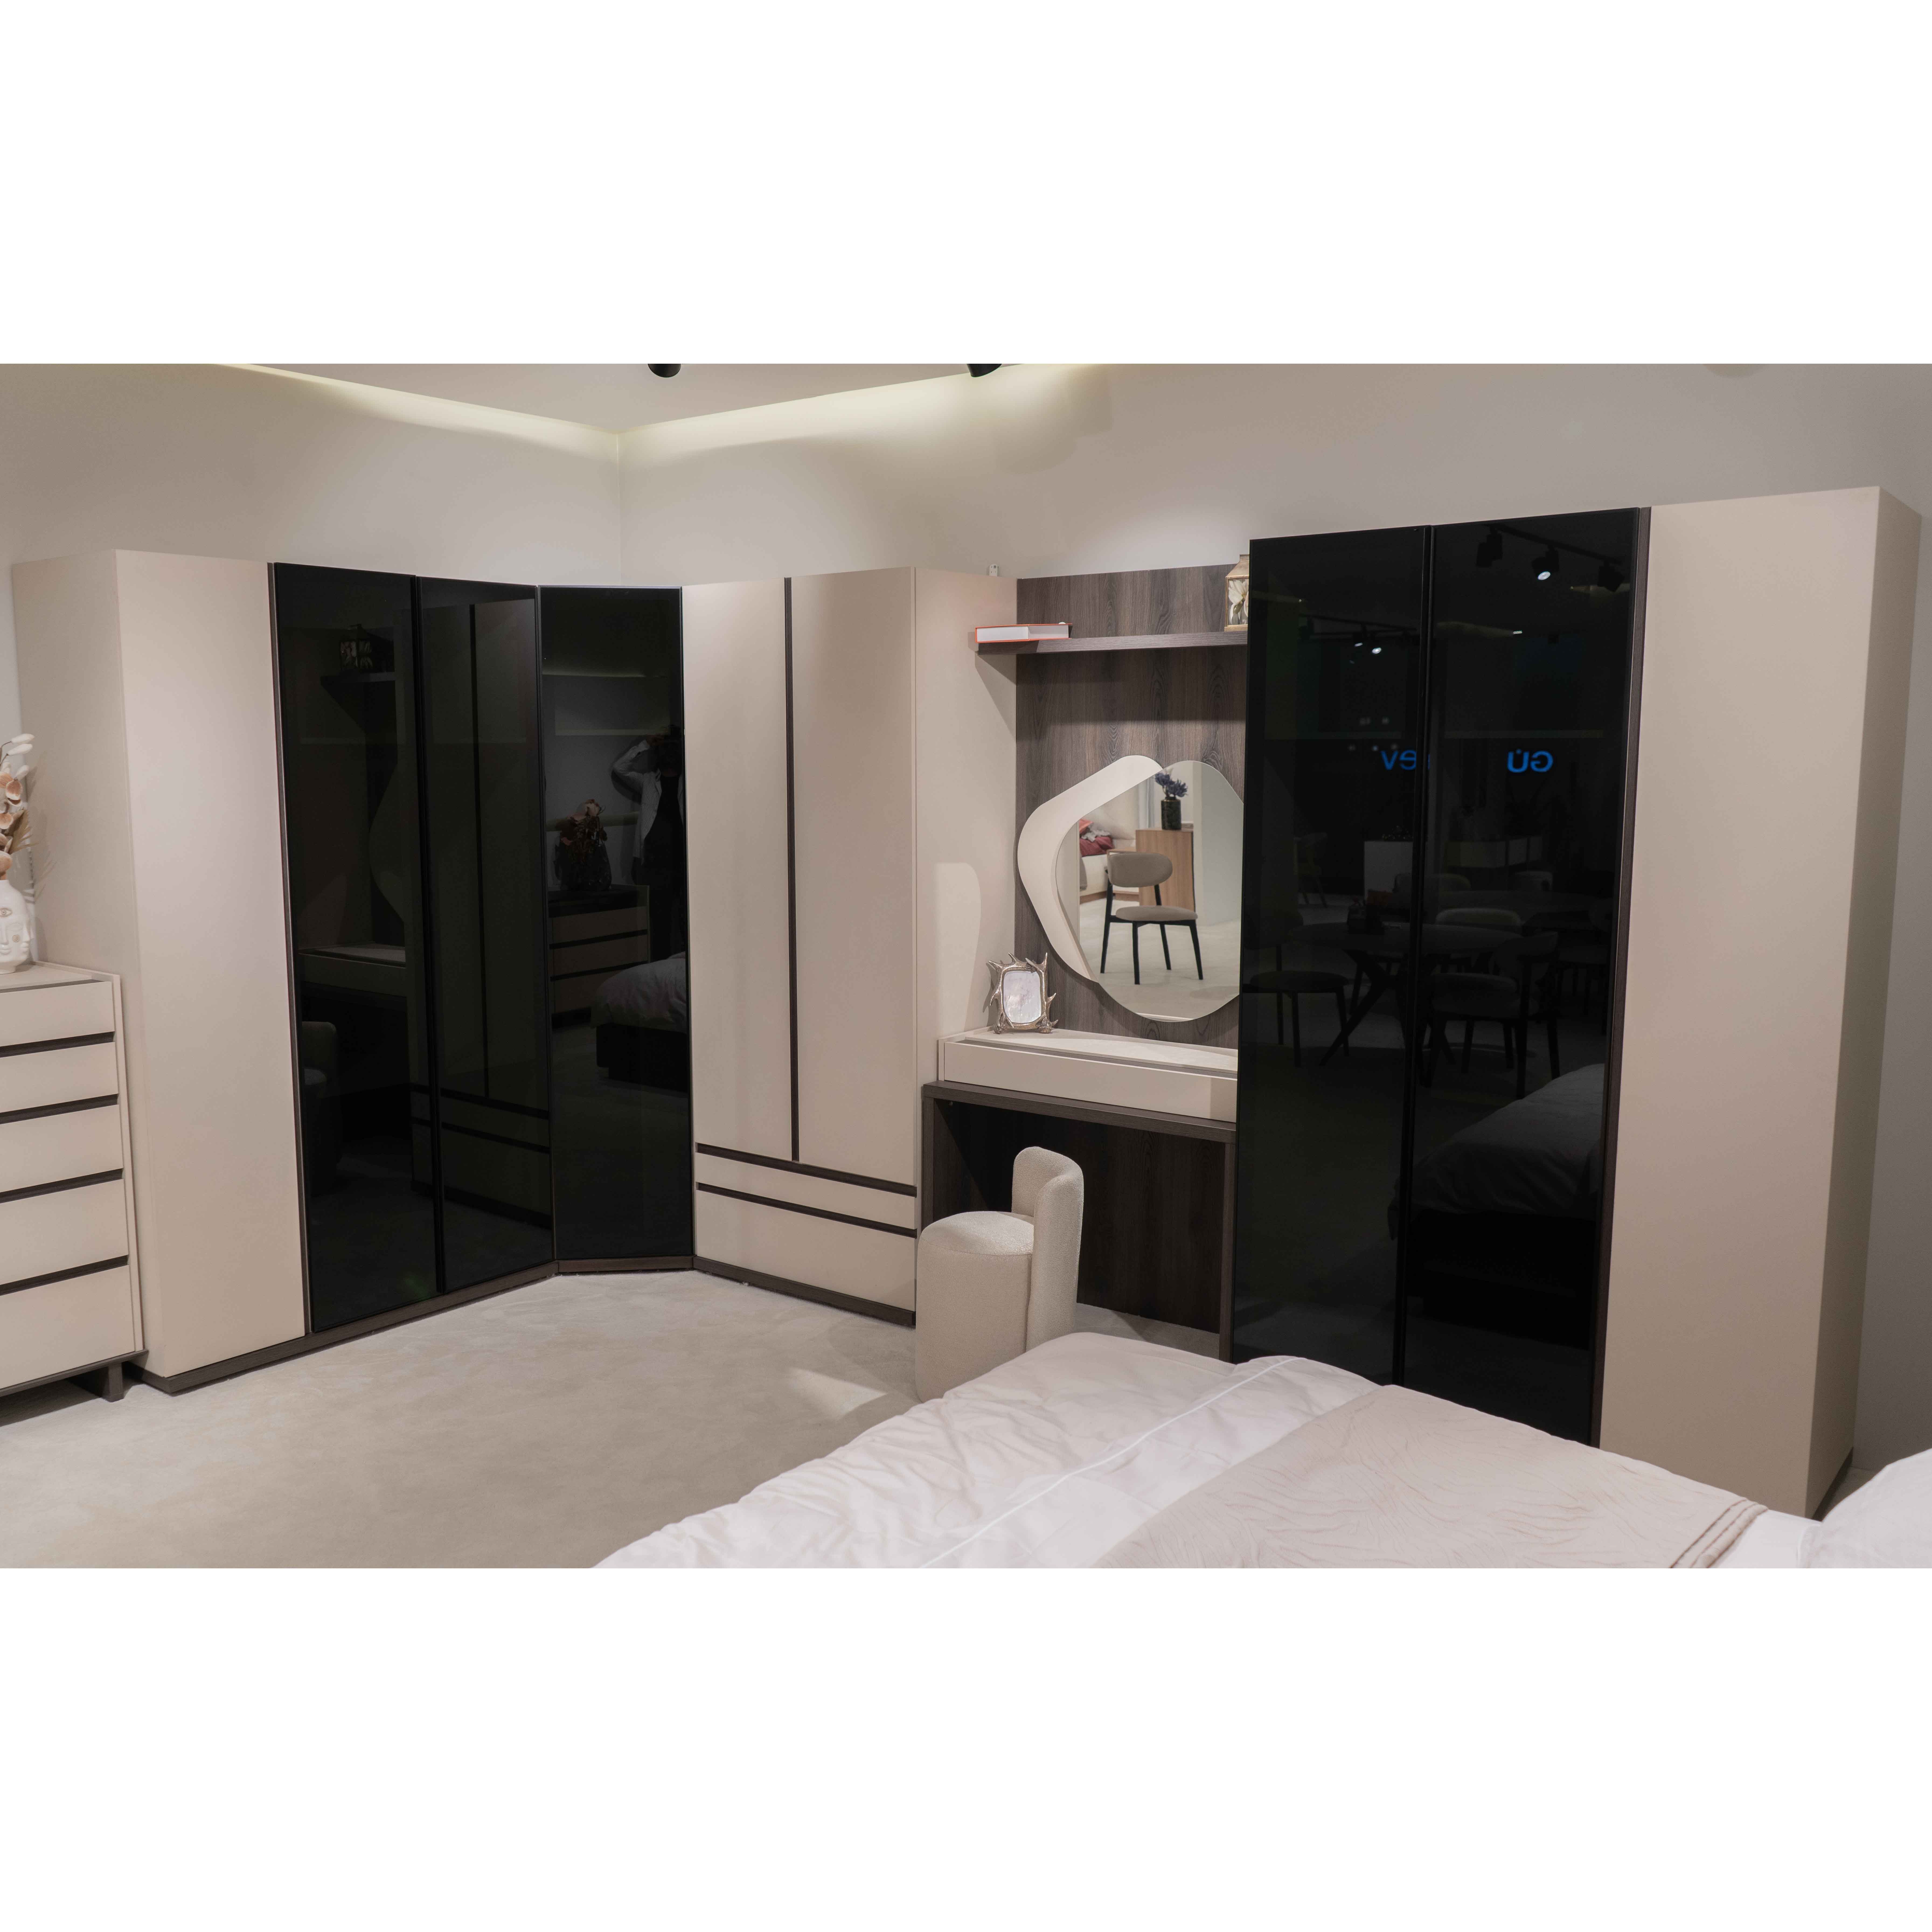 Bella Bedroom Vol2 (Bed Without Storage 160x200cm)